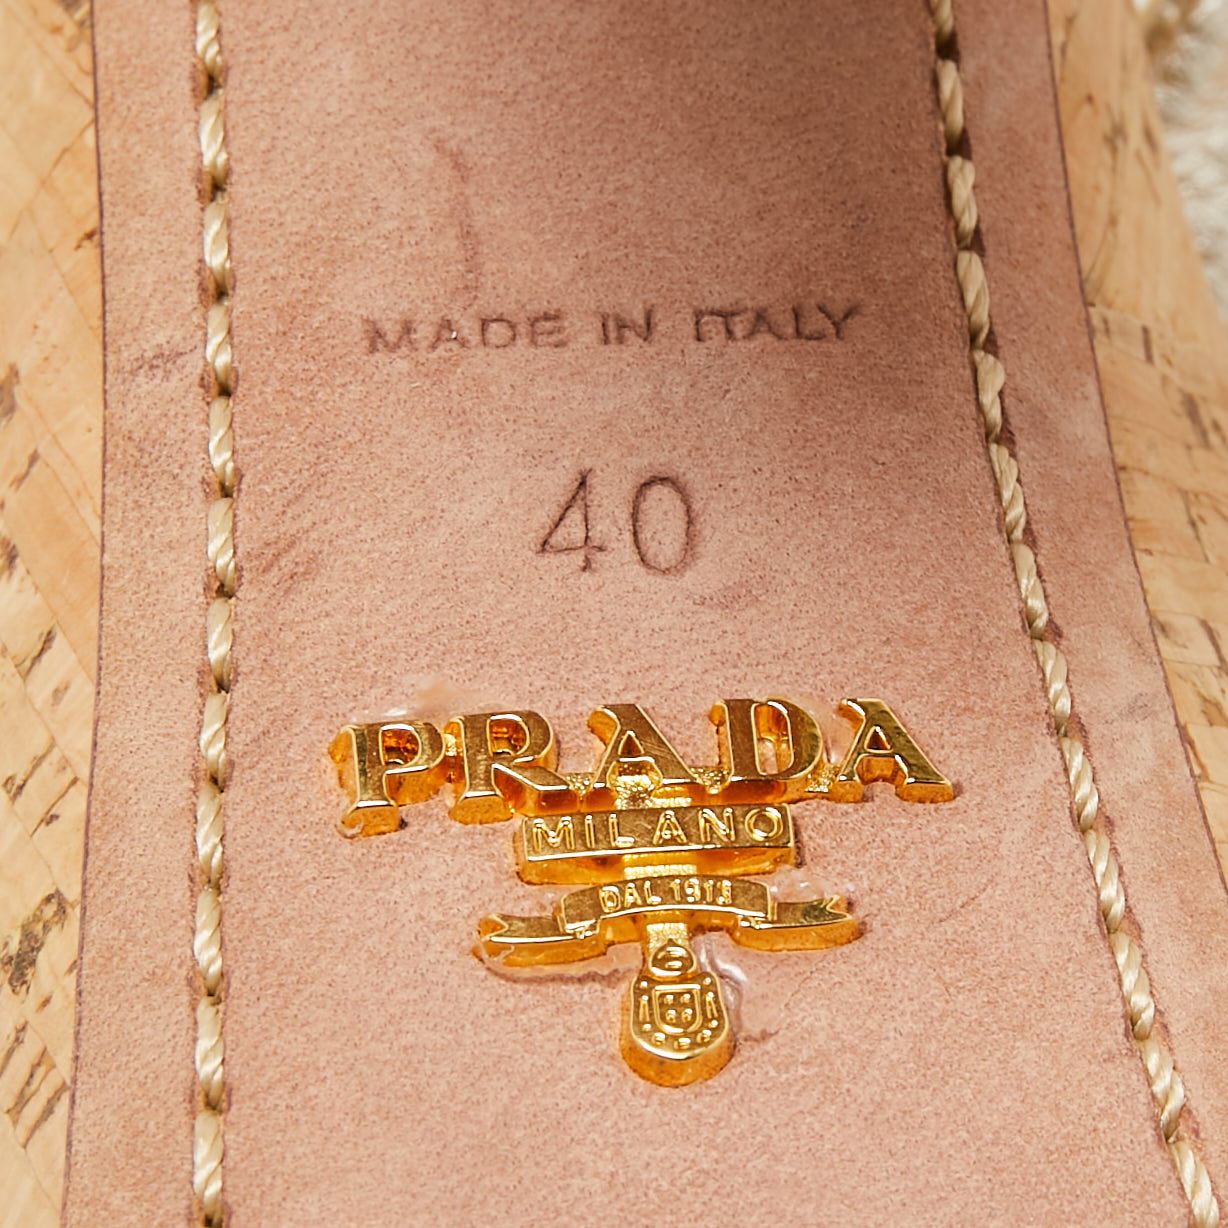 Prada Metallic Gold Leather Cork Waged Sandals Size 40